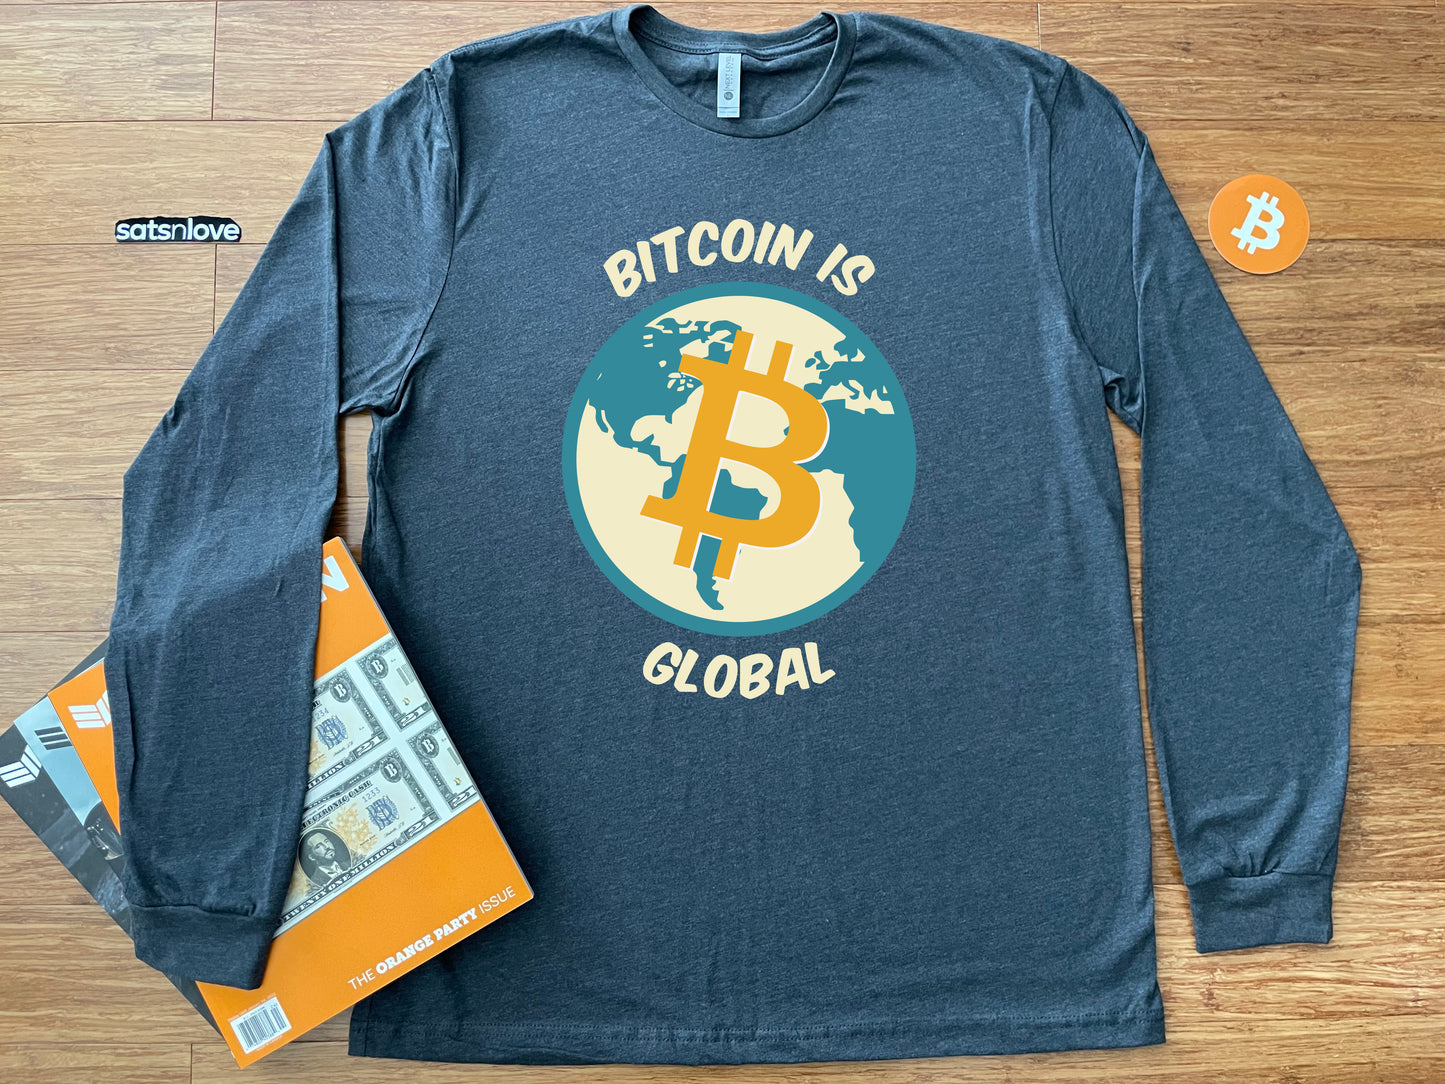 Bitcoin is Global